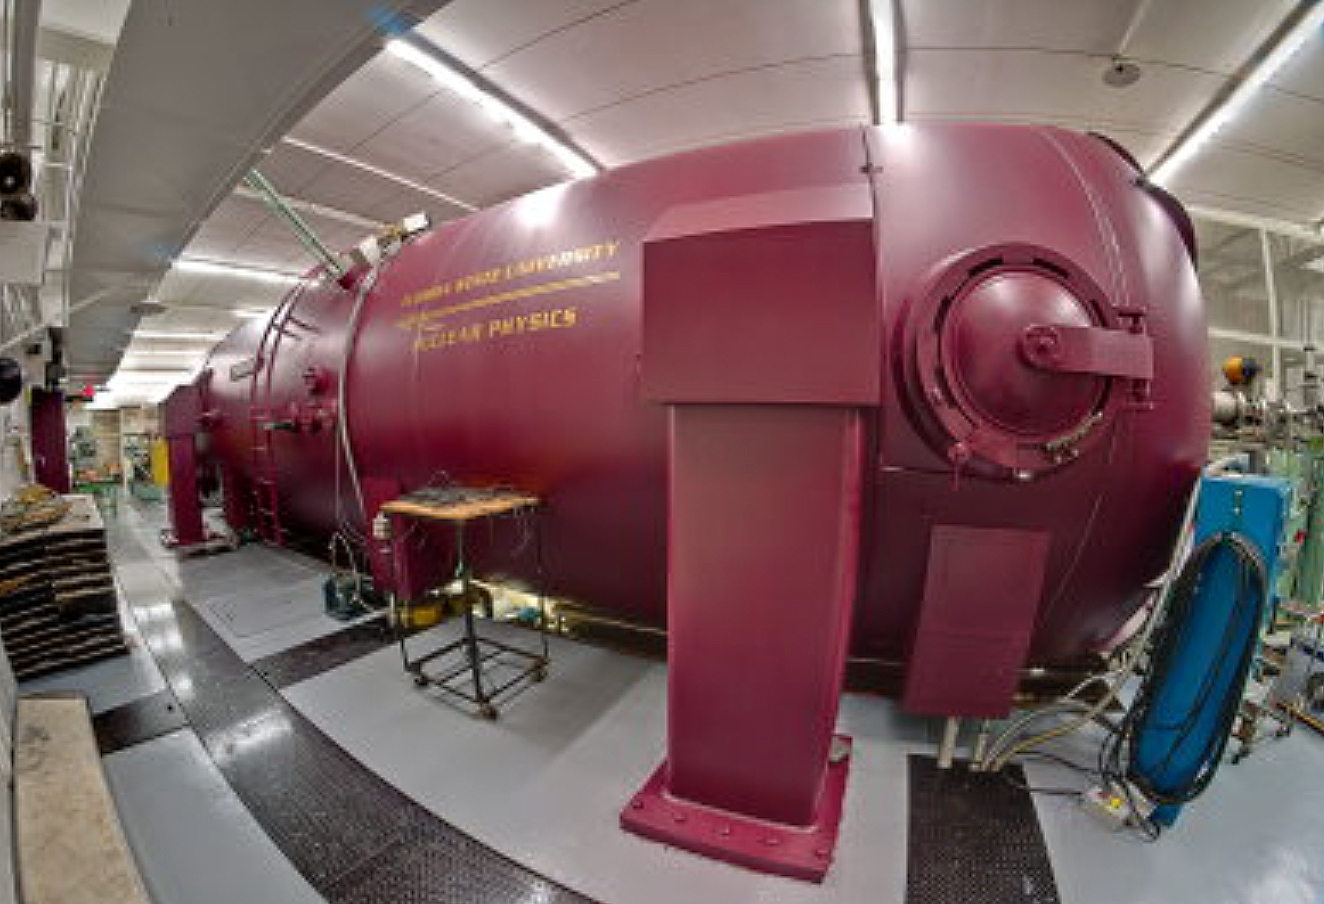 The Tandem Accelerator at Florida State University's John D. Fox Superconducting Linear Accelerator Laboratory